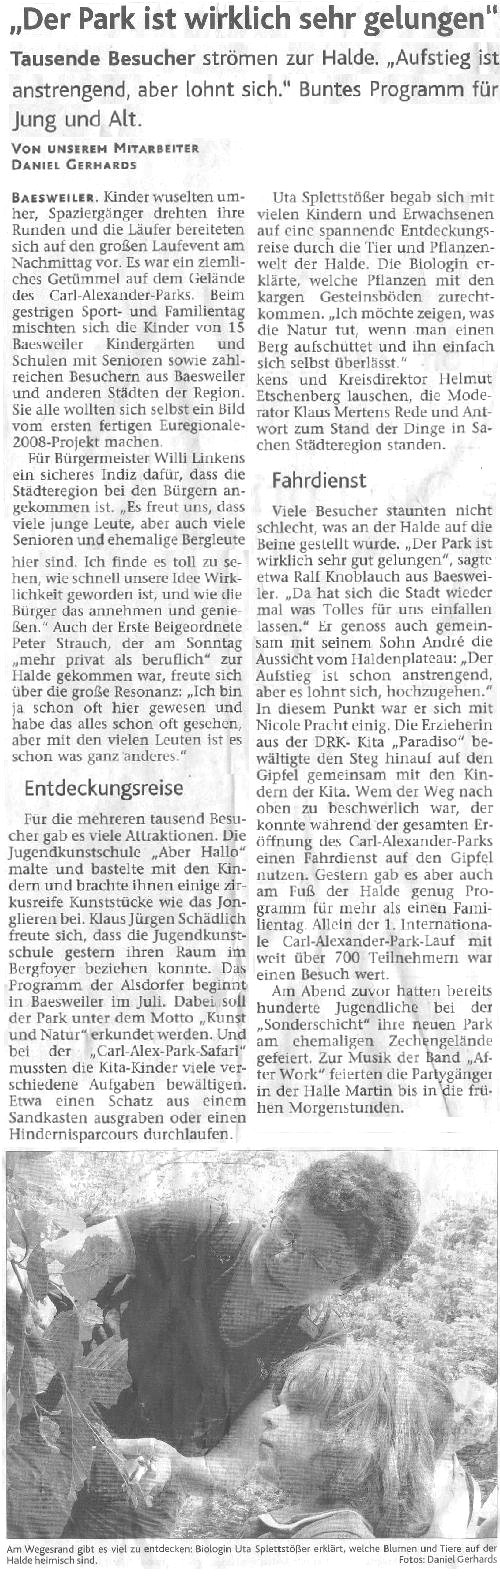 Aachener Nachrichten 26. Mai 2008